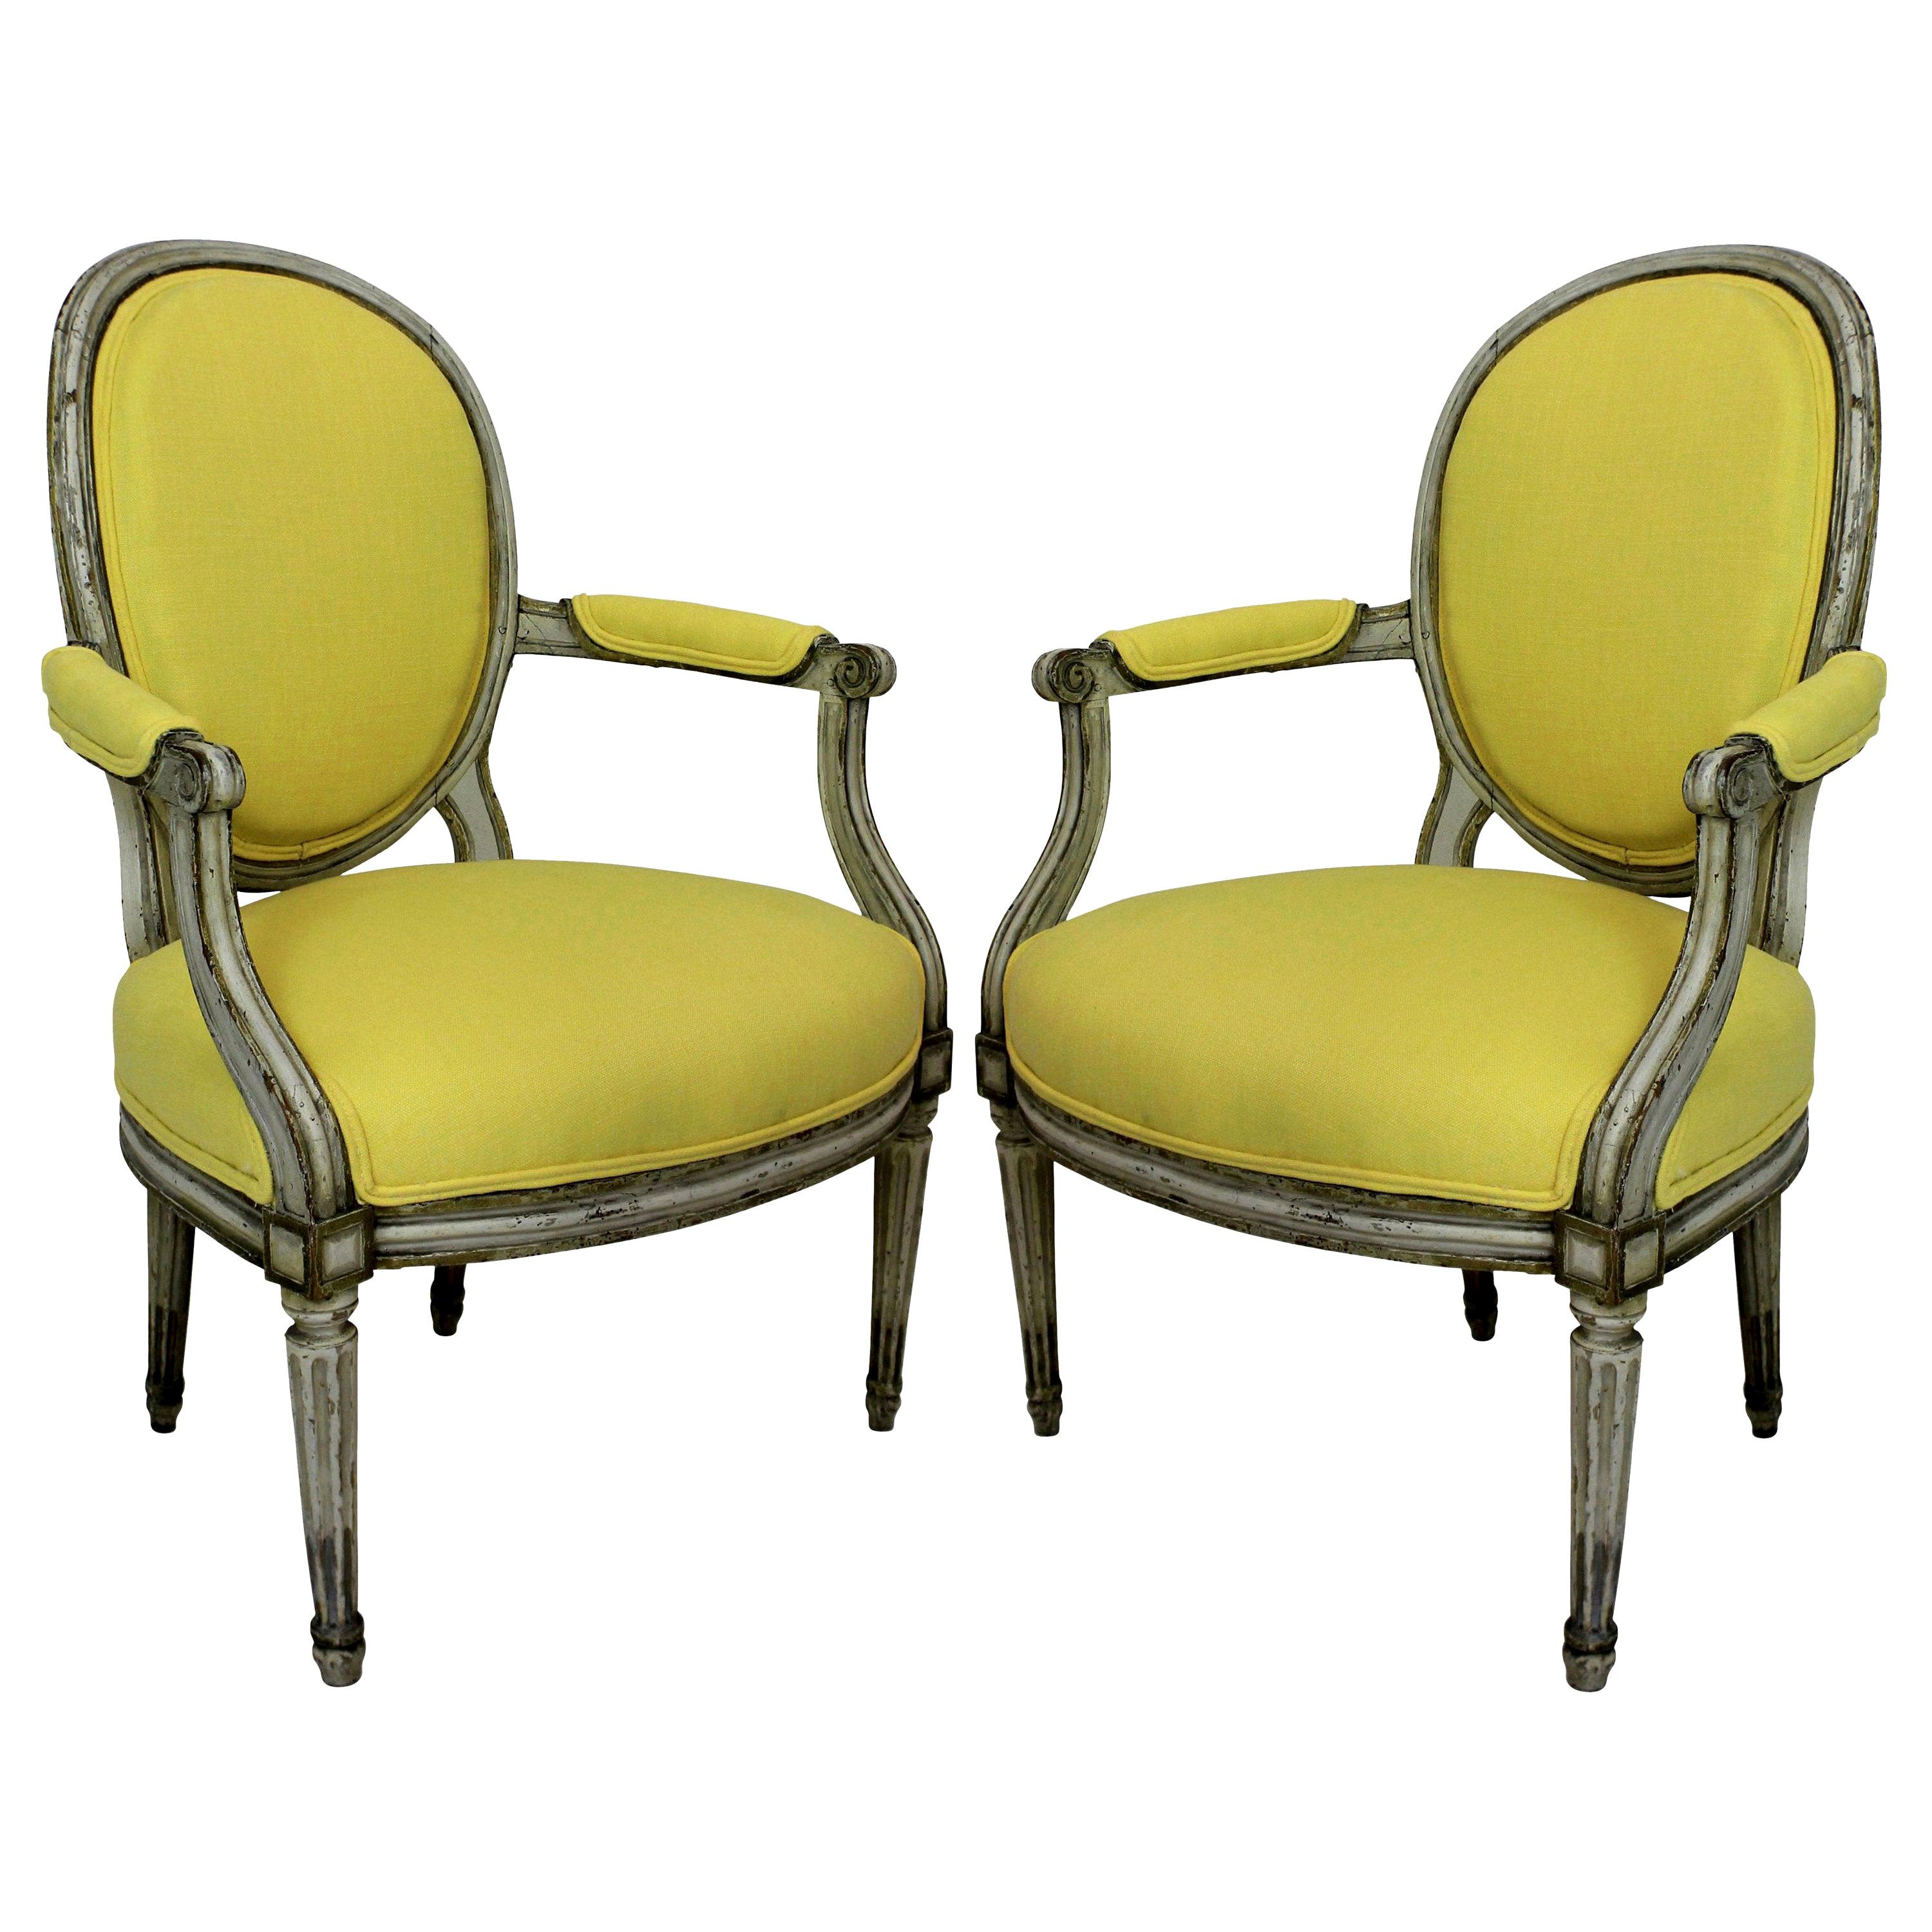 Pair of 18th Century Armchairs in Lemon Linen